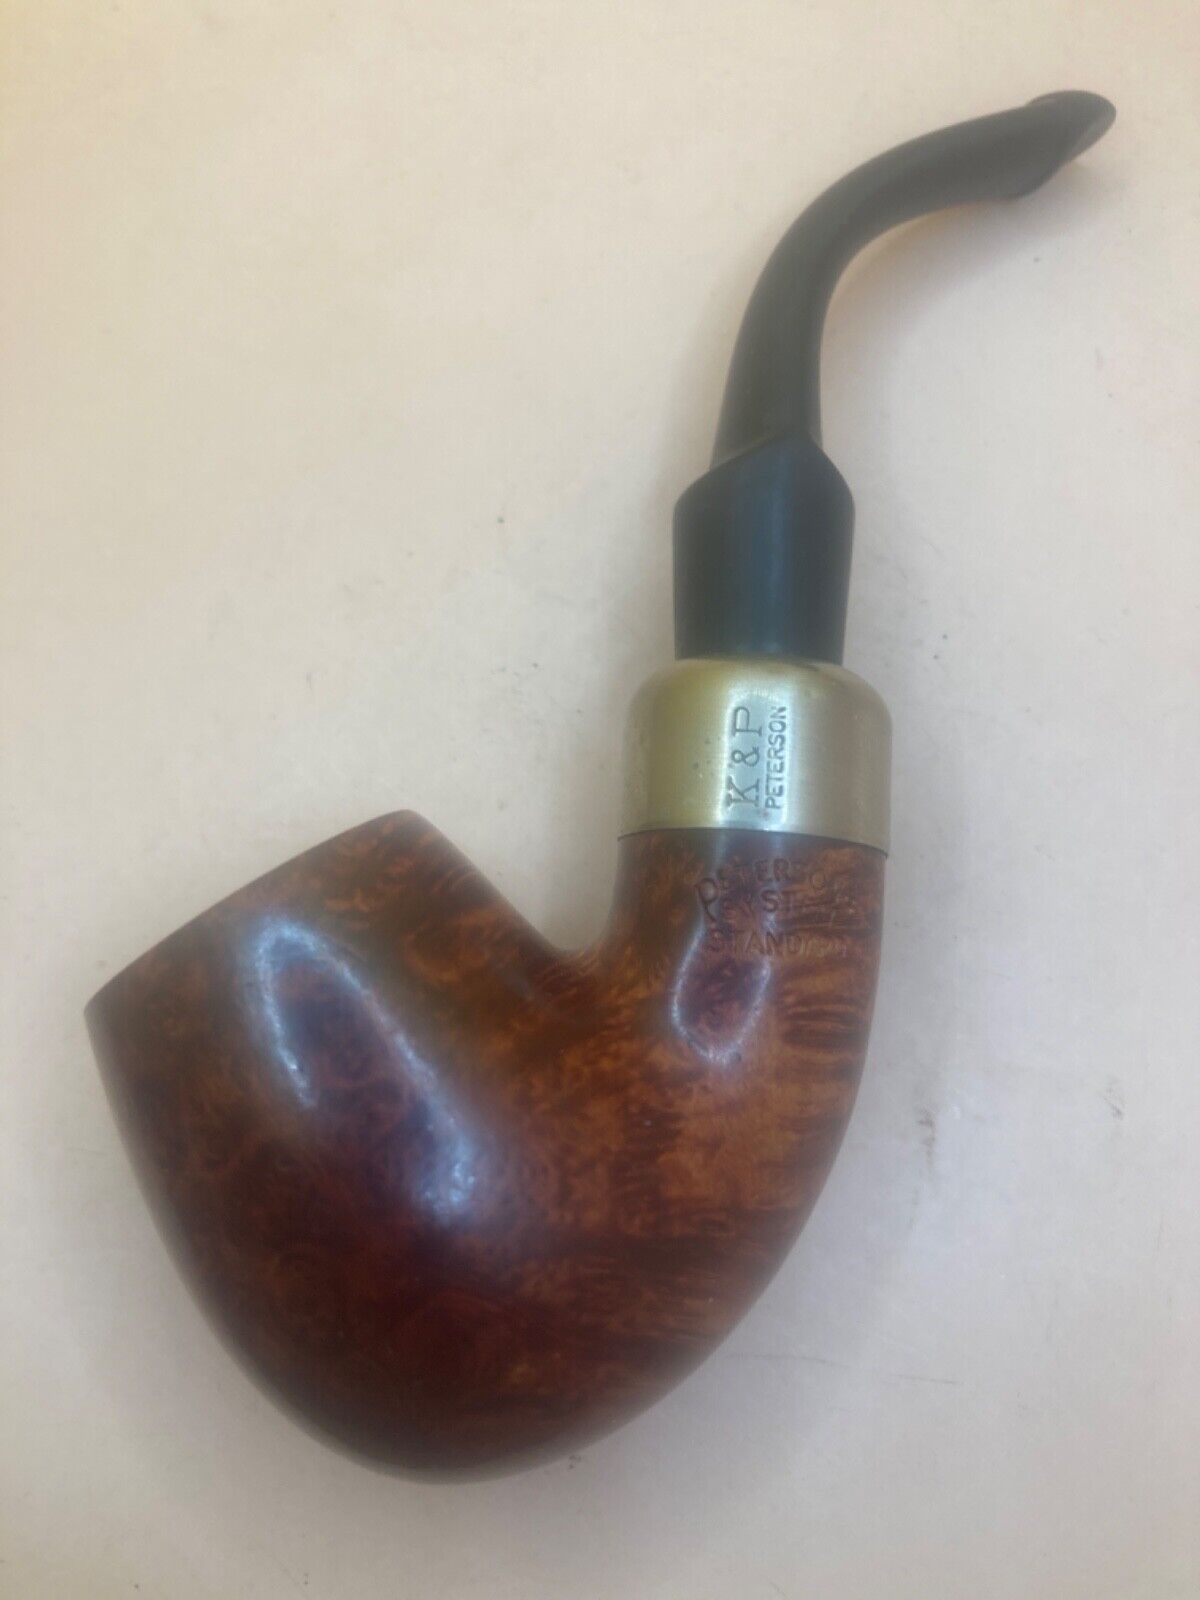 Beautiful Peterson’s Standard 312 Republic of Ireland Tobacco Pipe - Nice Gift